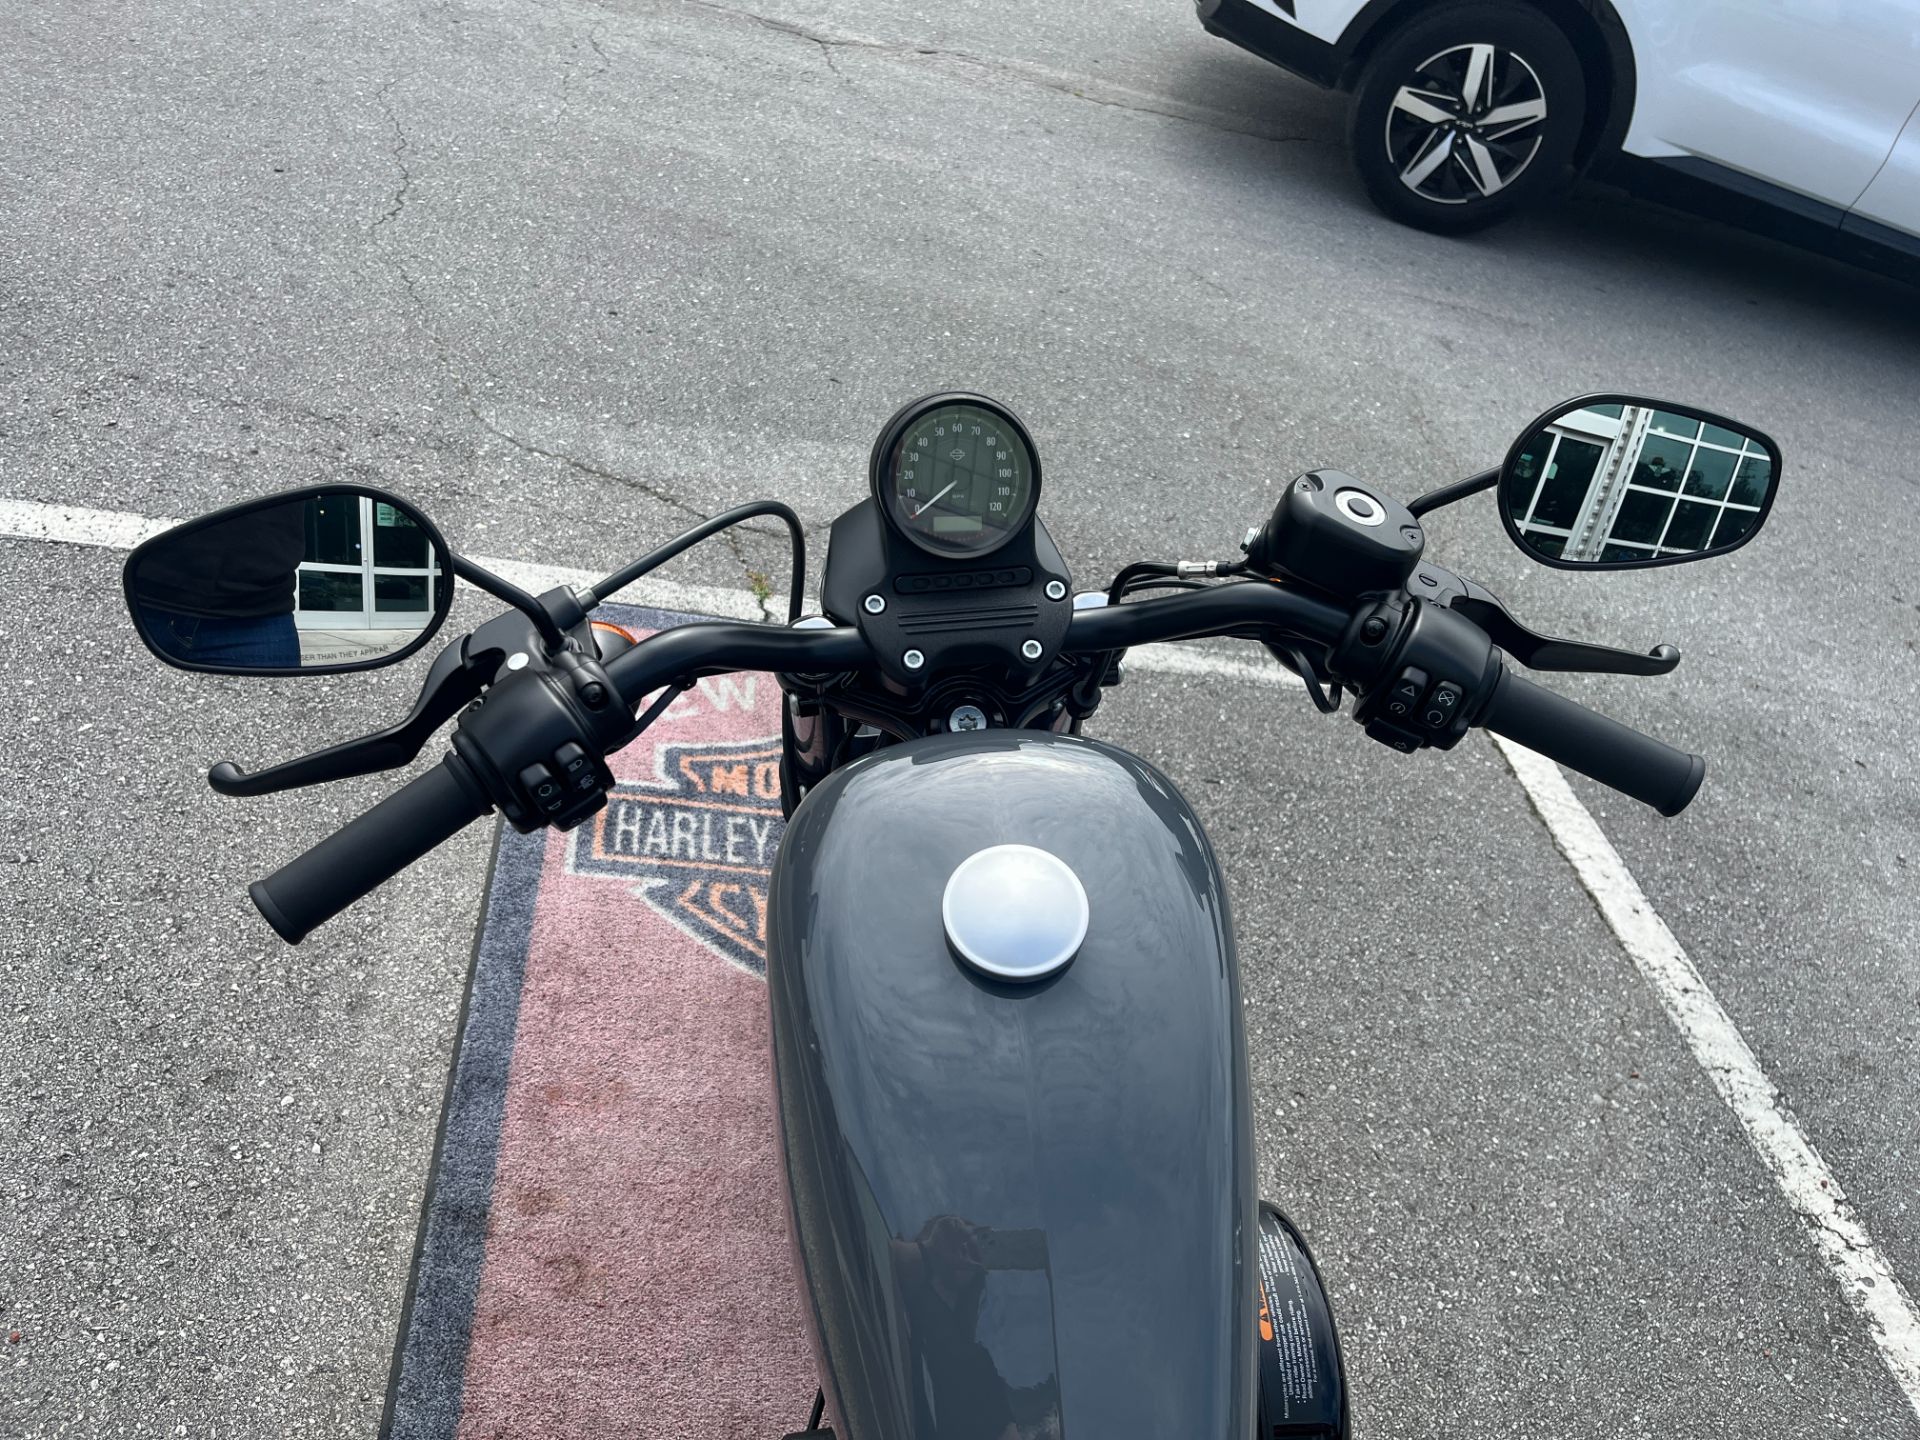 2022 Harley-Davidson Iron 883™ in Jacksonville, North Carolina - Photo 10